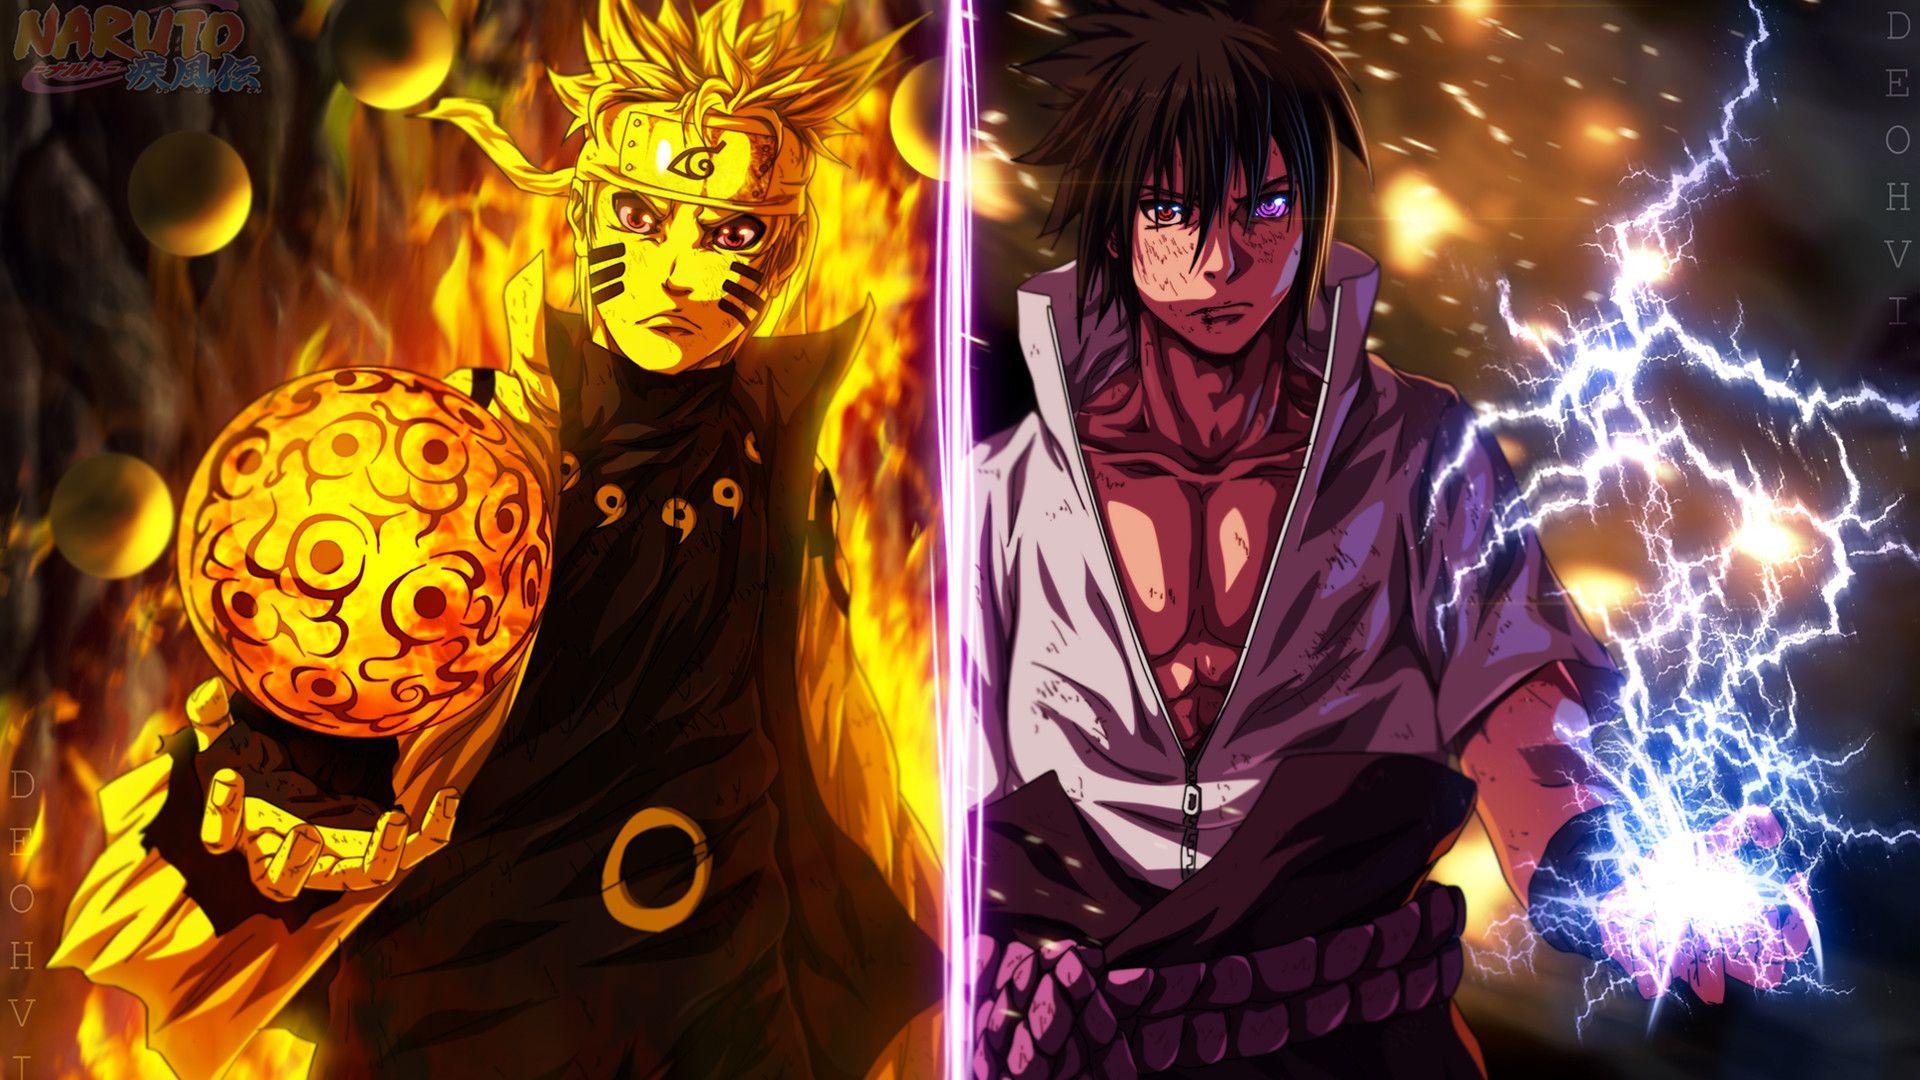 Cool Naruto vs Sasuke Wallpapers - Top Free Cool Naruto vs Sasuke